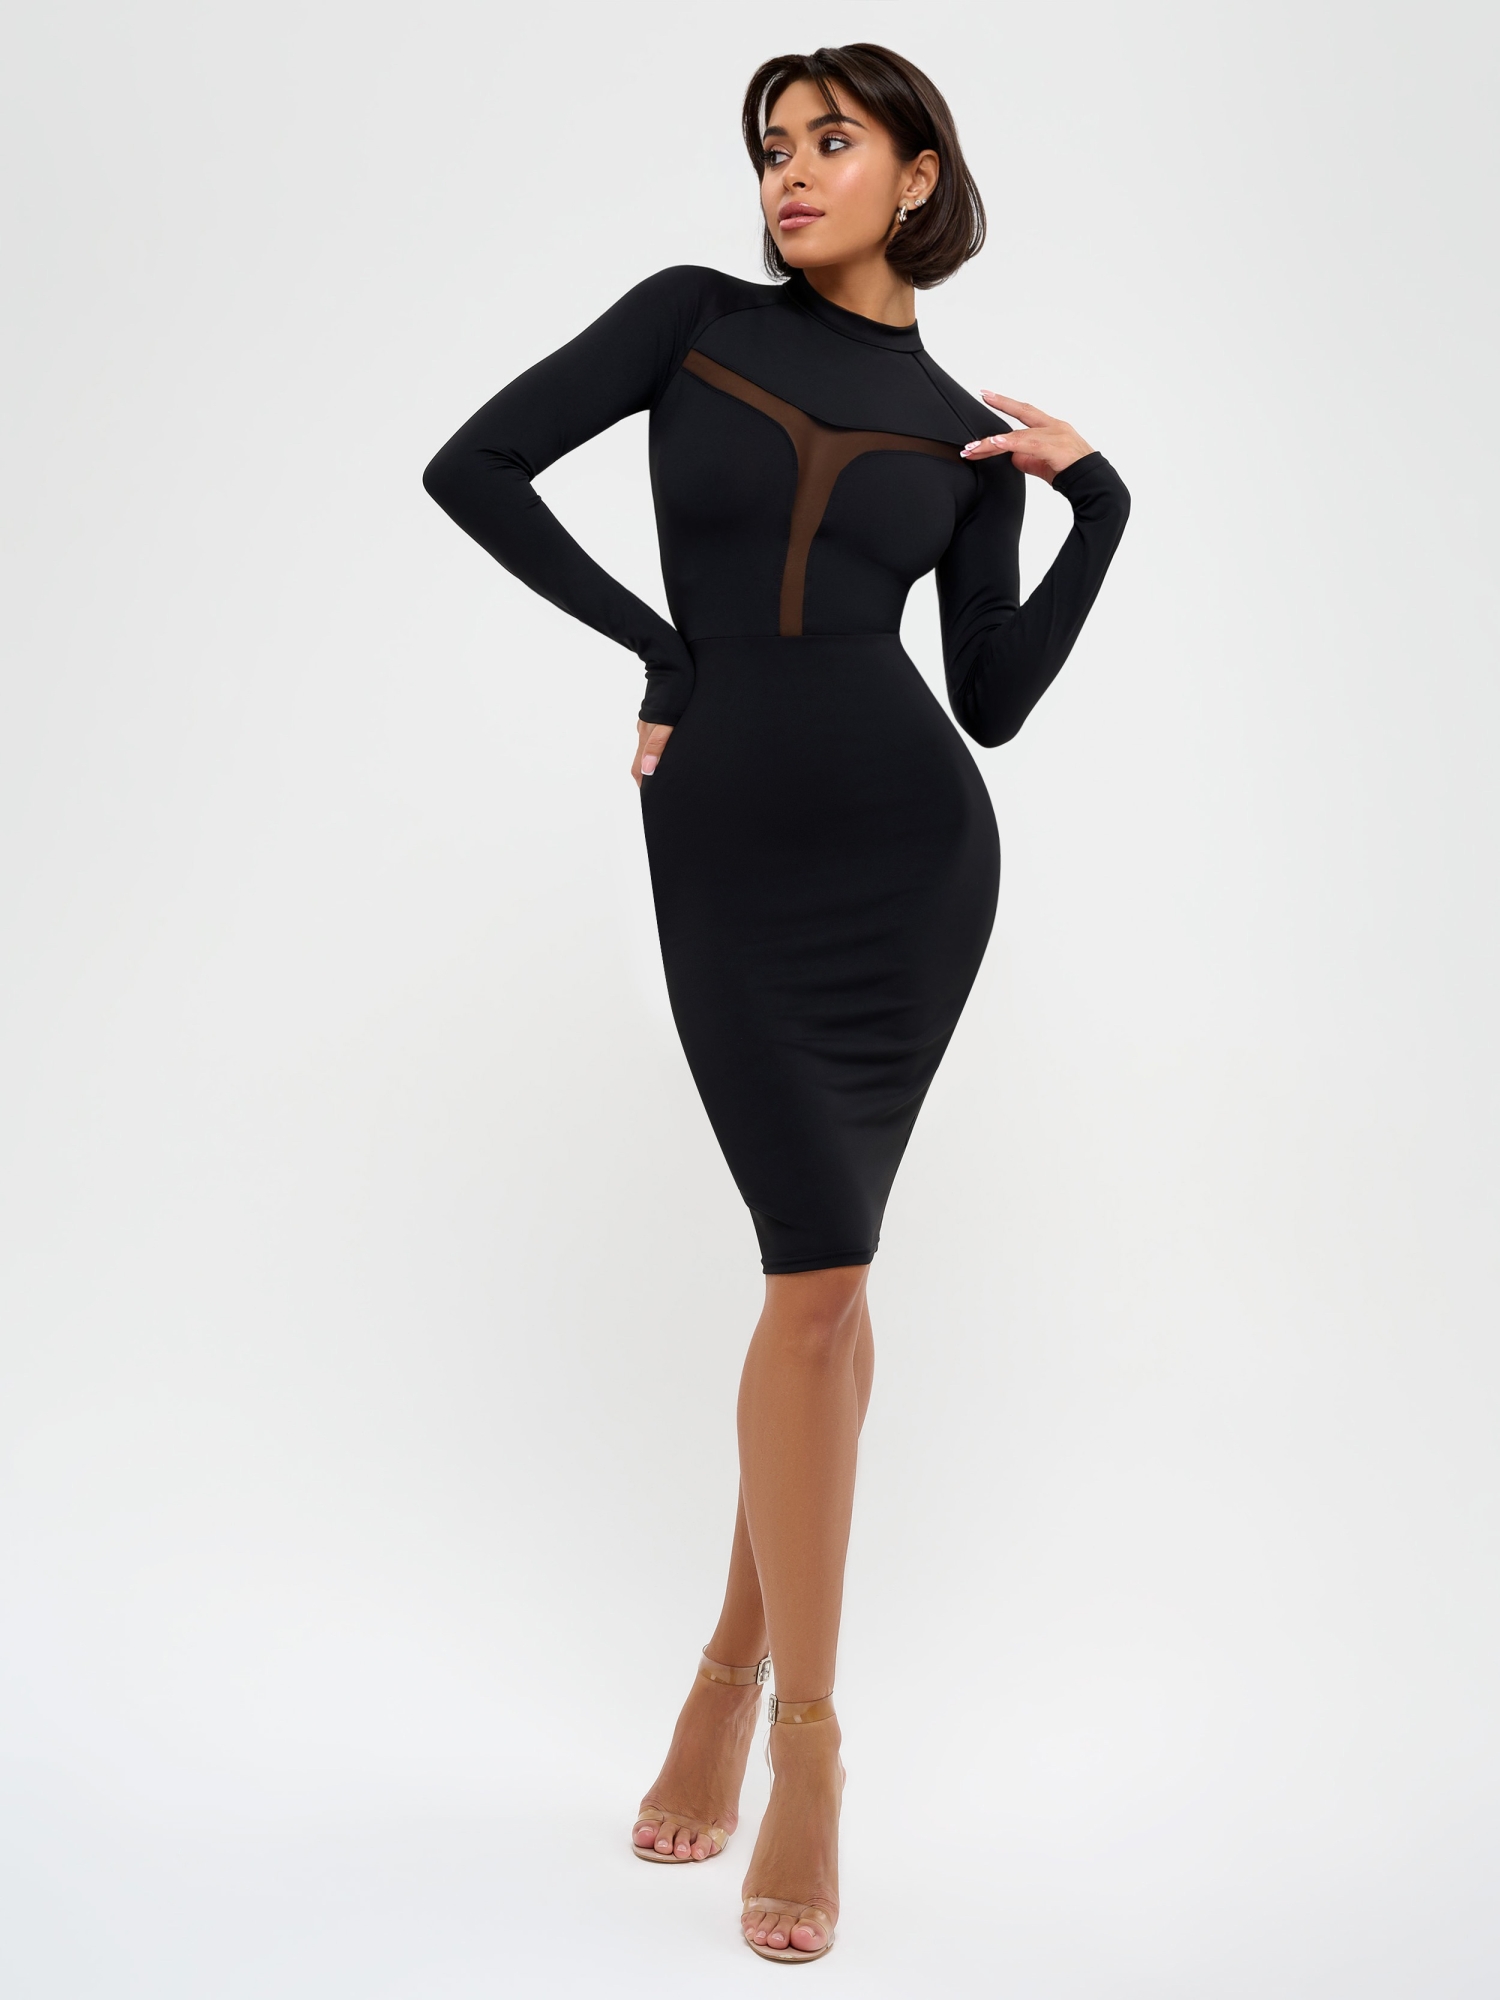 Bona Fashion: Aphrodisiac Dress "Black" фото 6